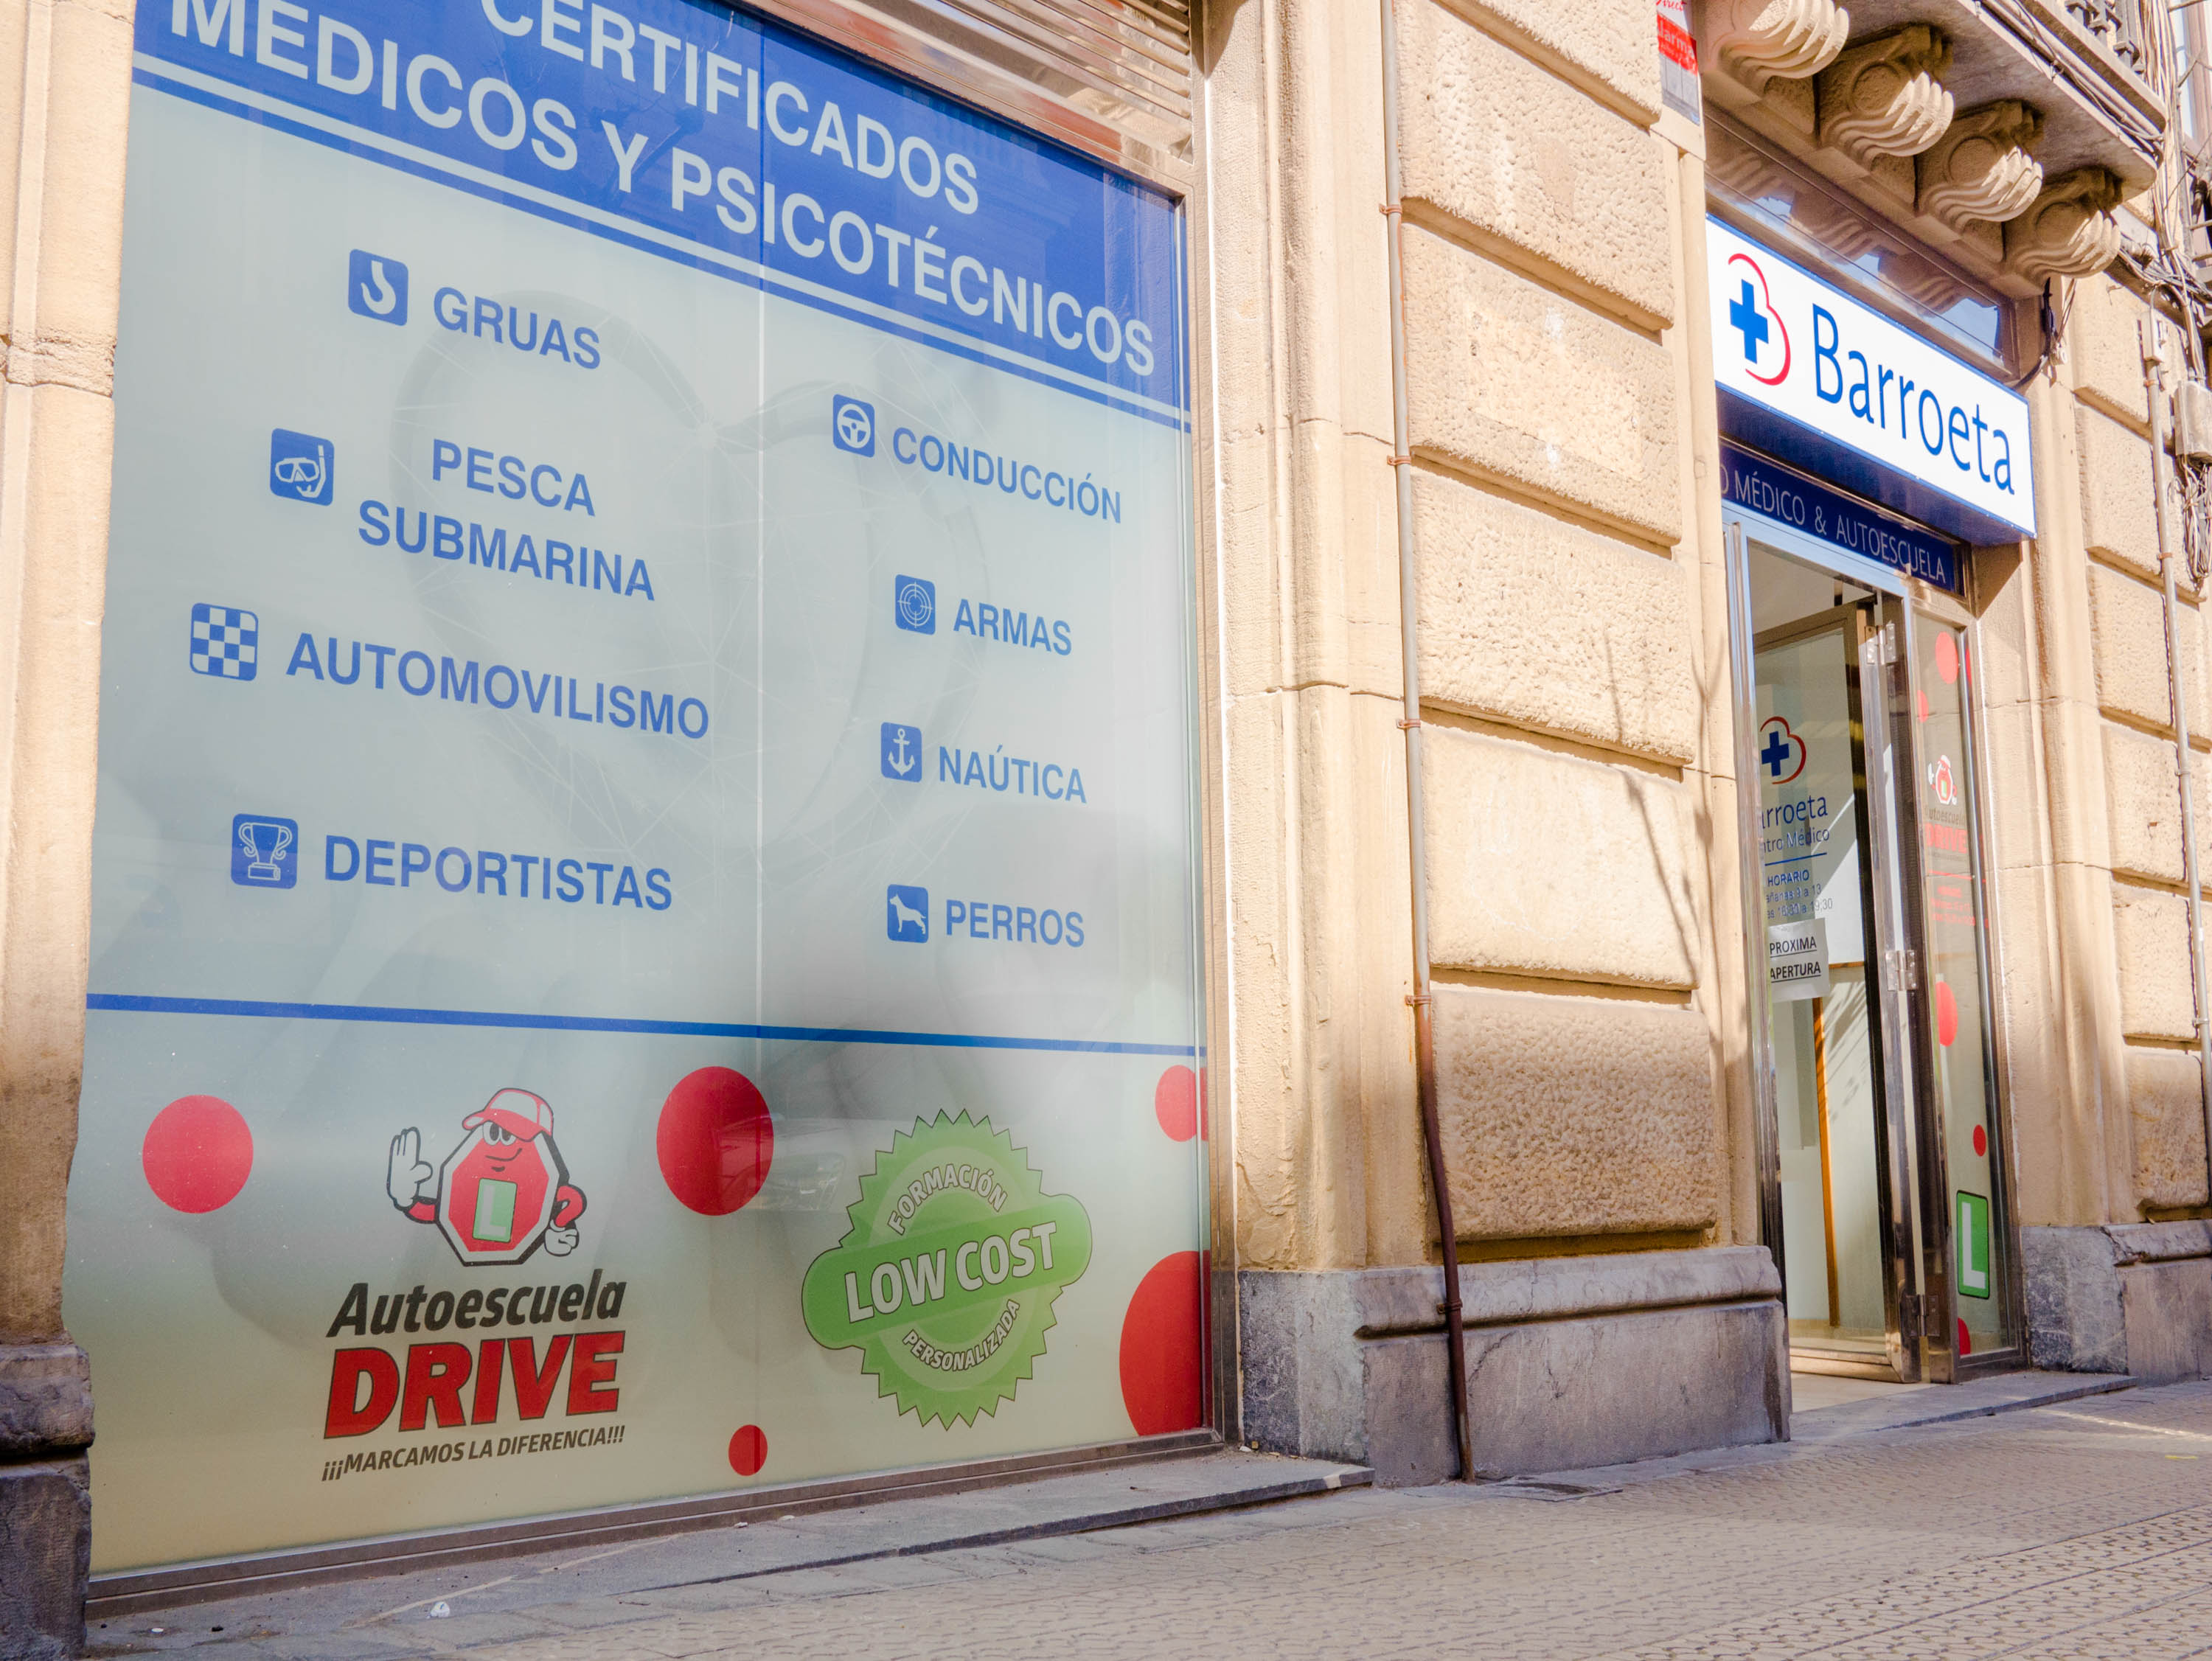 Centro Médico Barroeta, renueva tu carnet en Bilbao